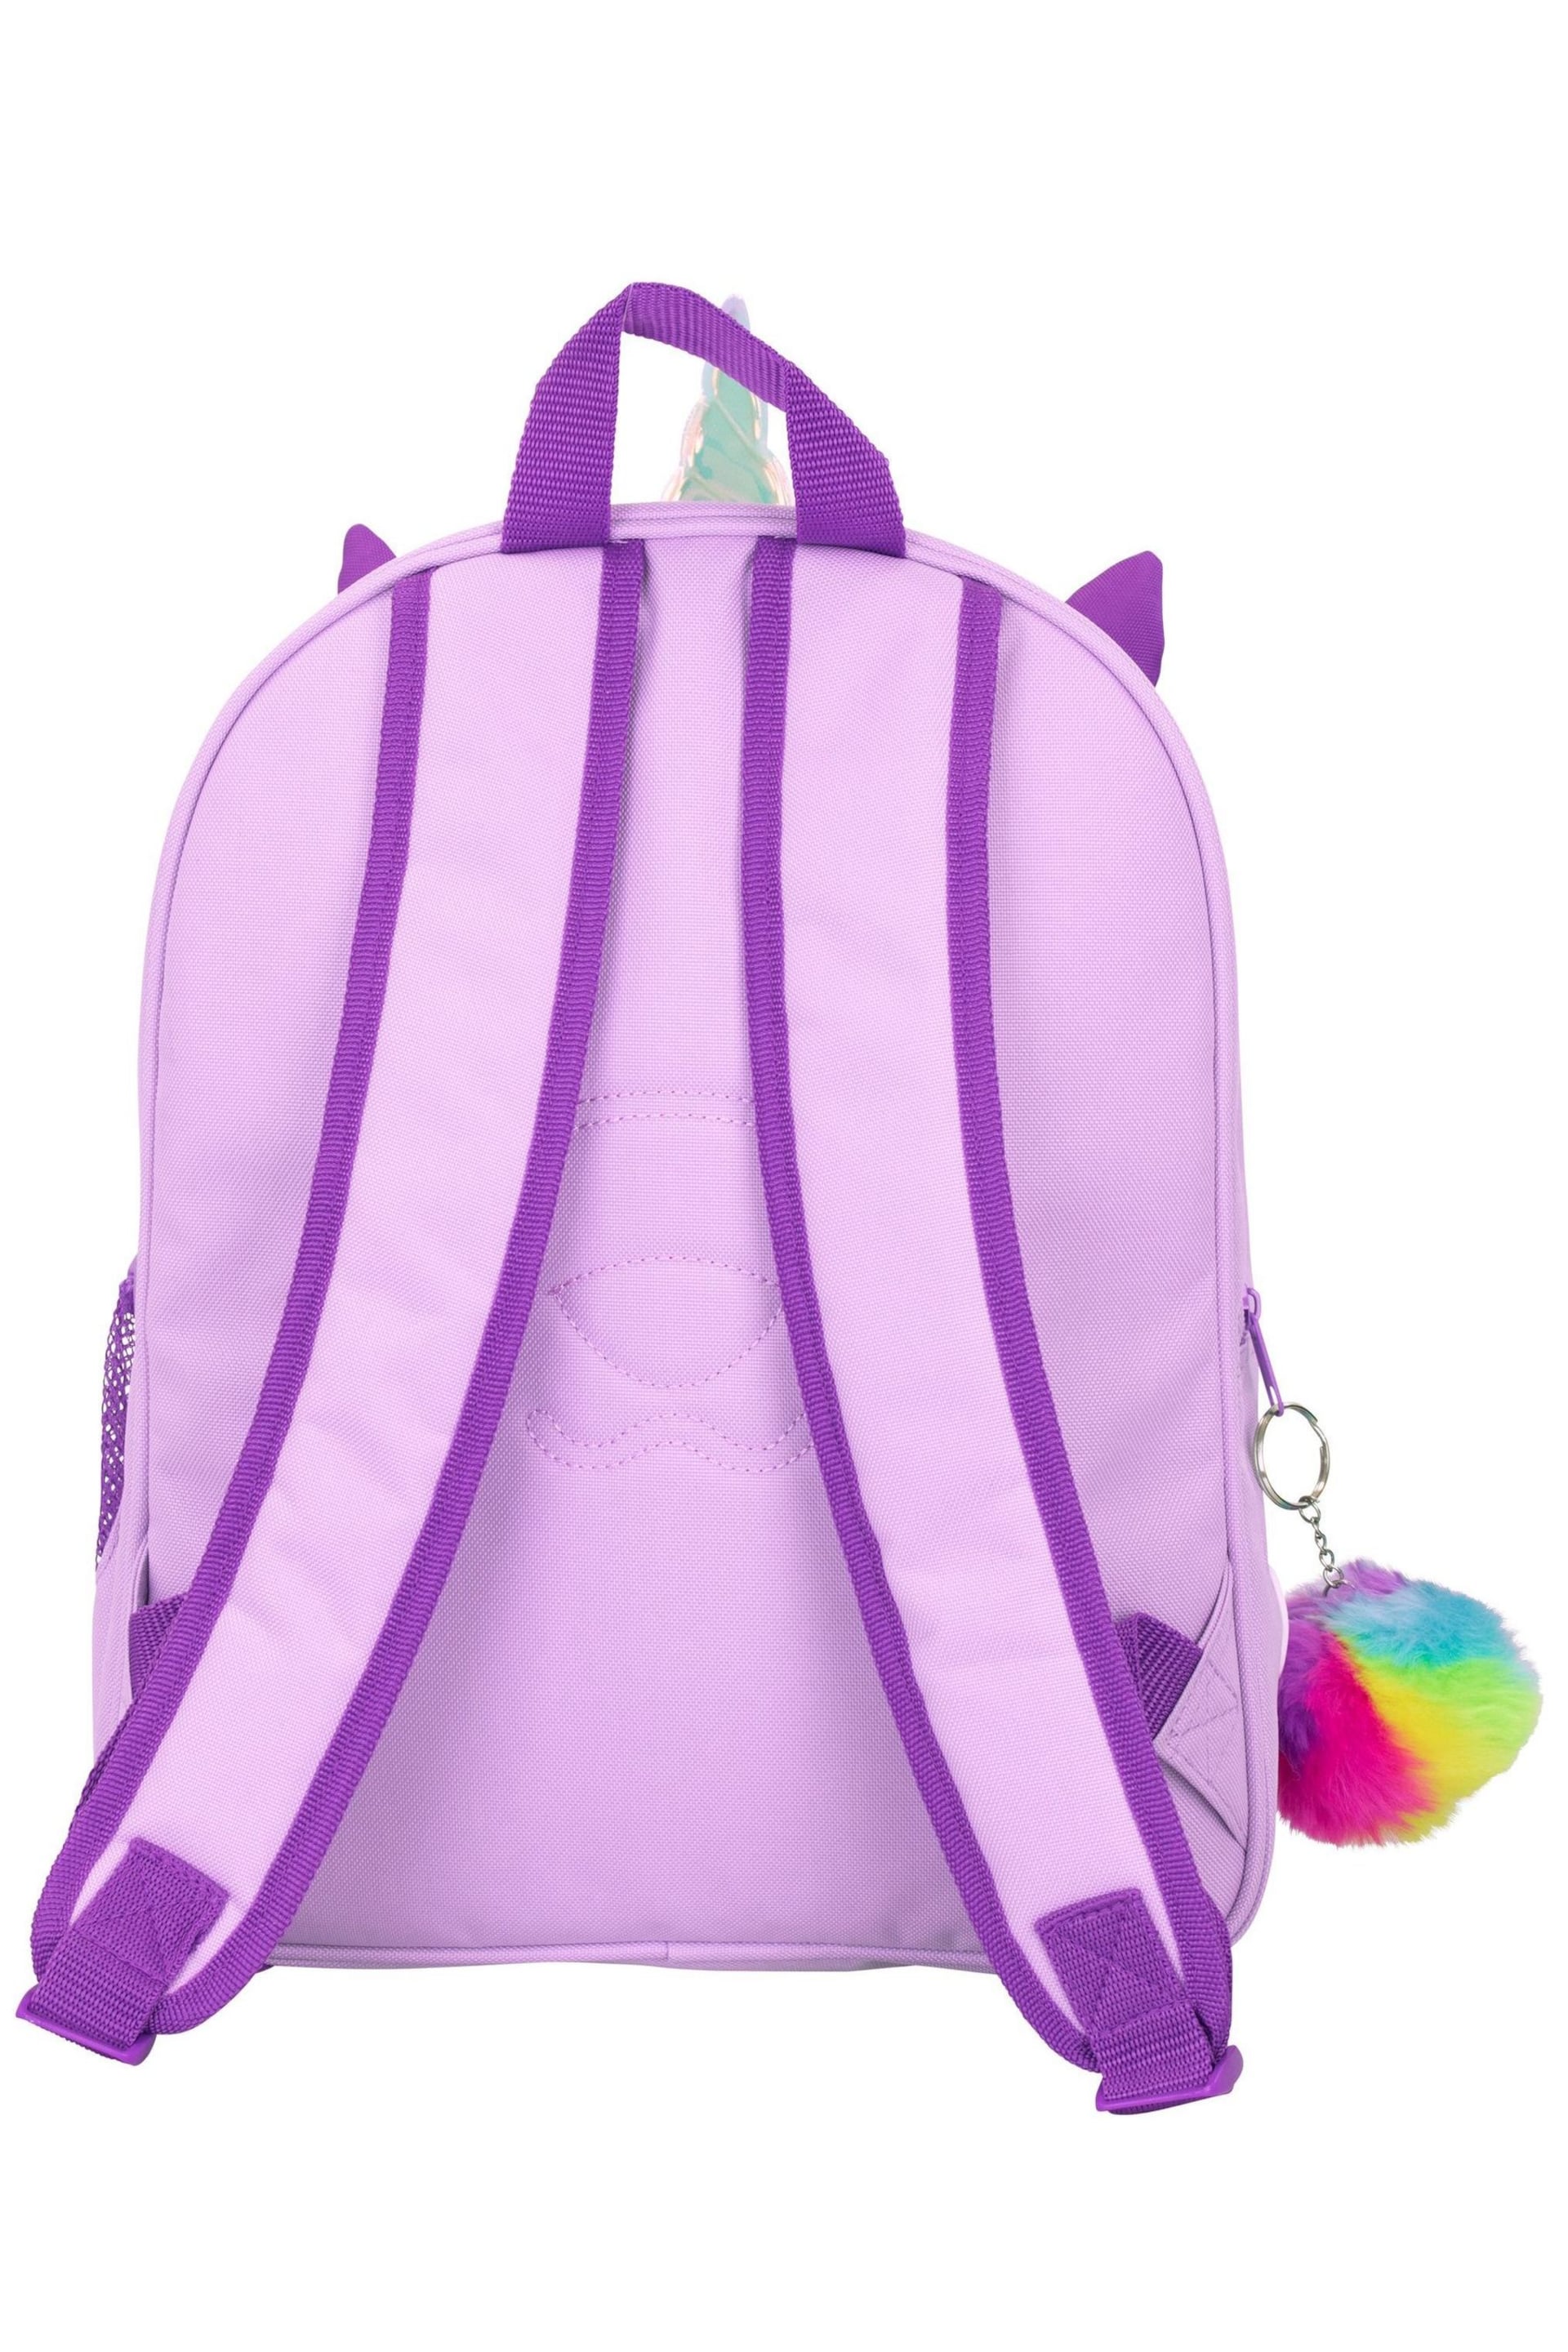 Harry Bear Purple Unicorn Backpack with Pom Pom Keyring - Image 4 of 5